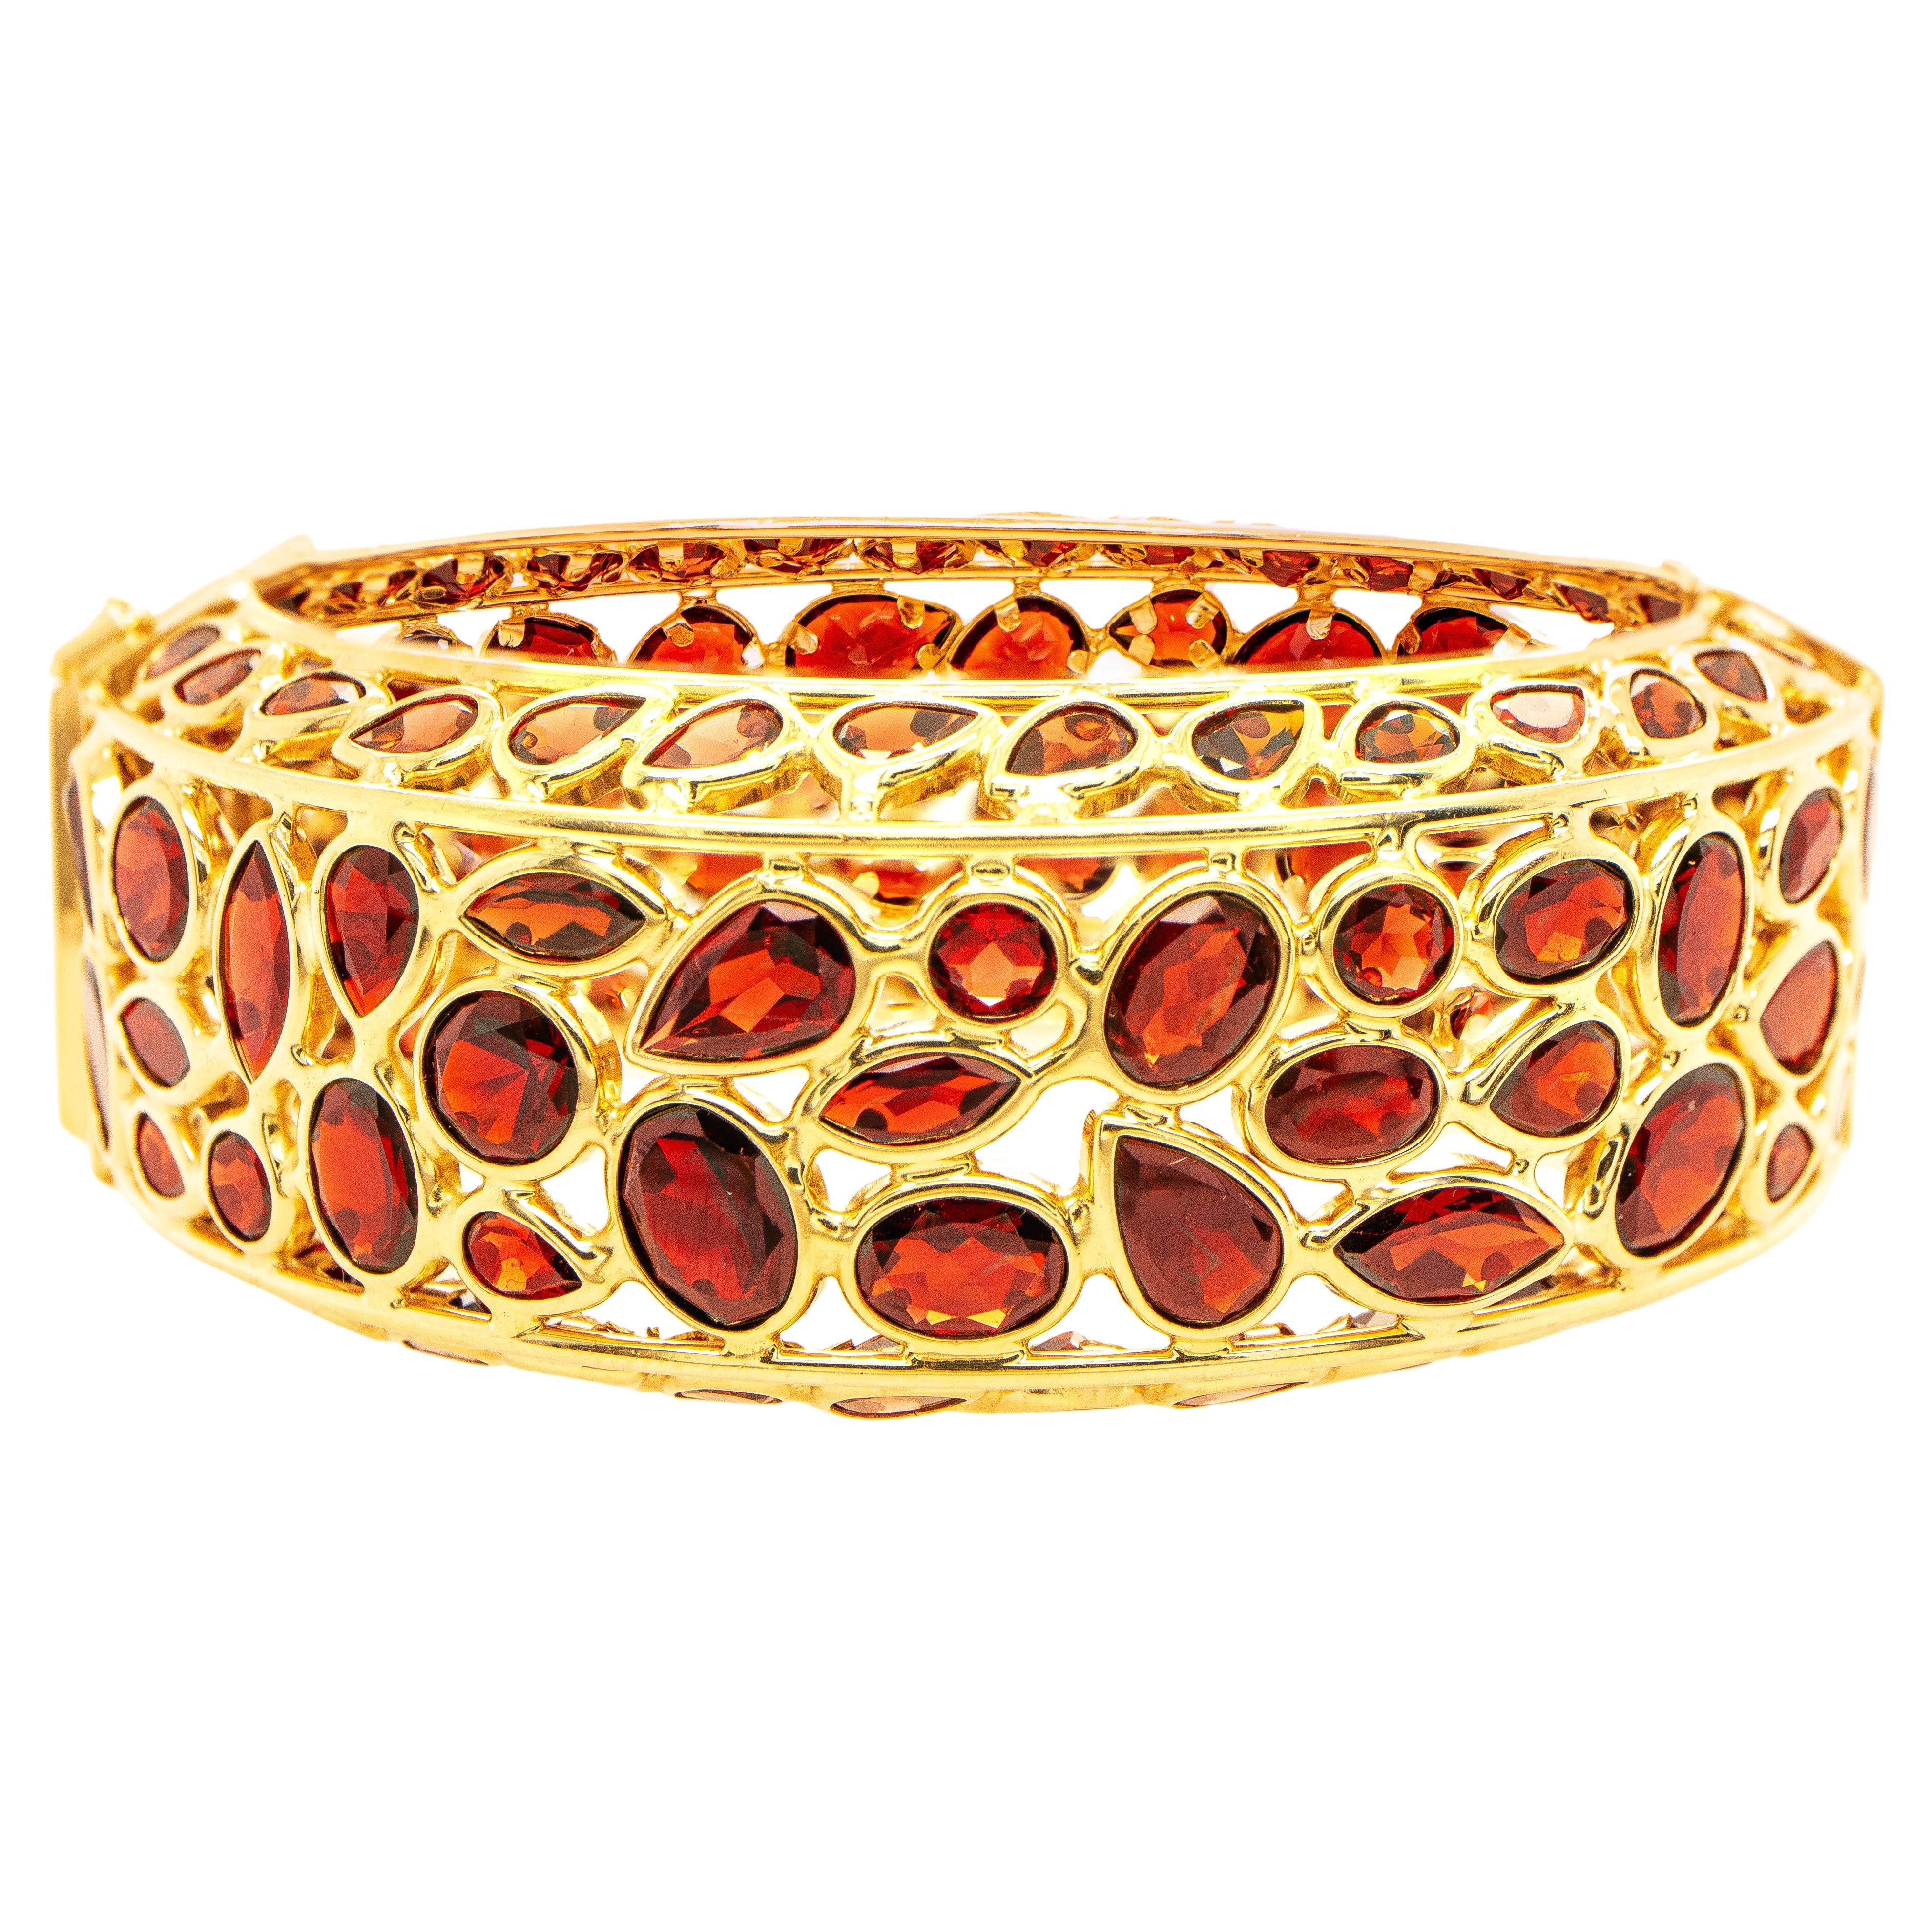 Important Cougar Bangle Bracelet Red Garnets 100 Carats 14K Yellow Gold